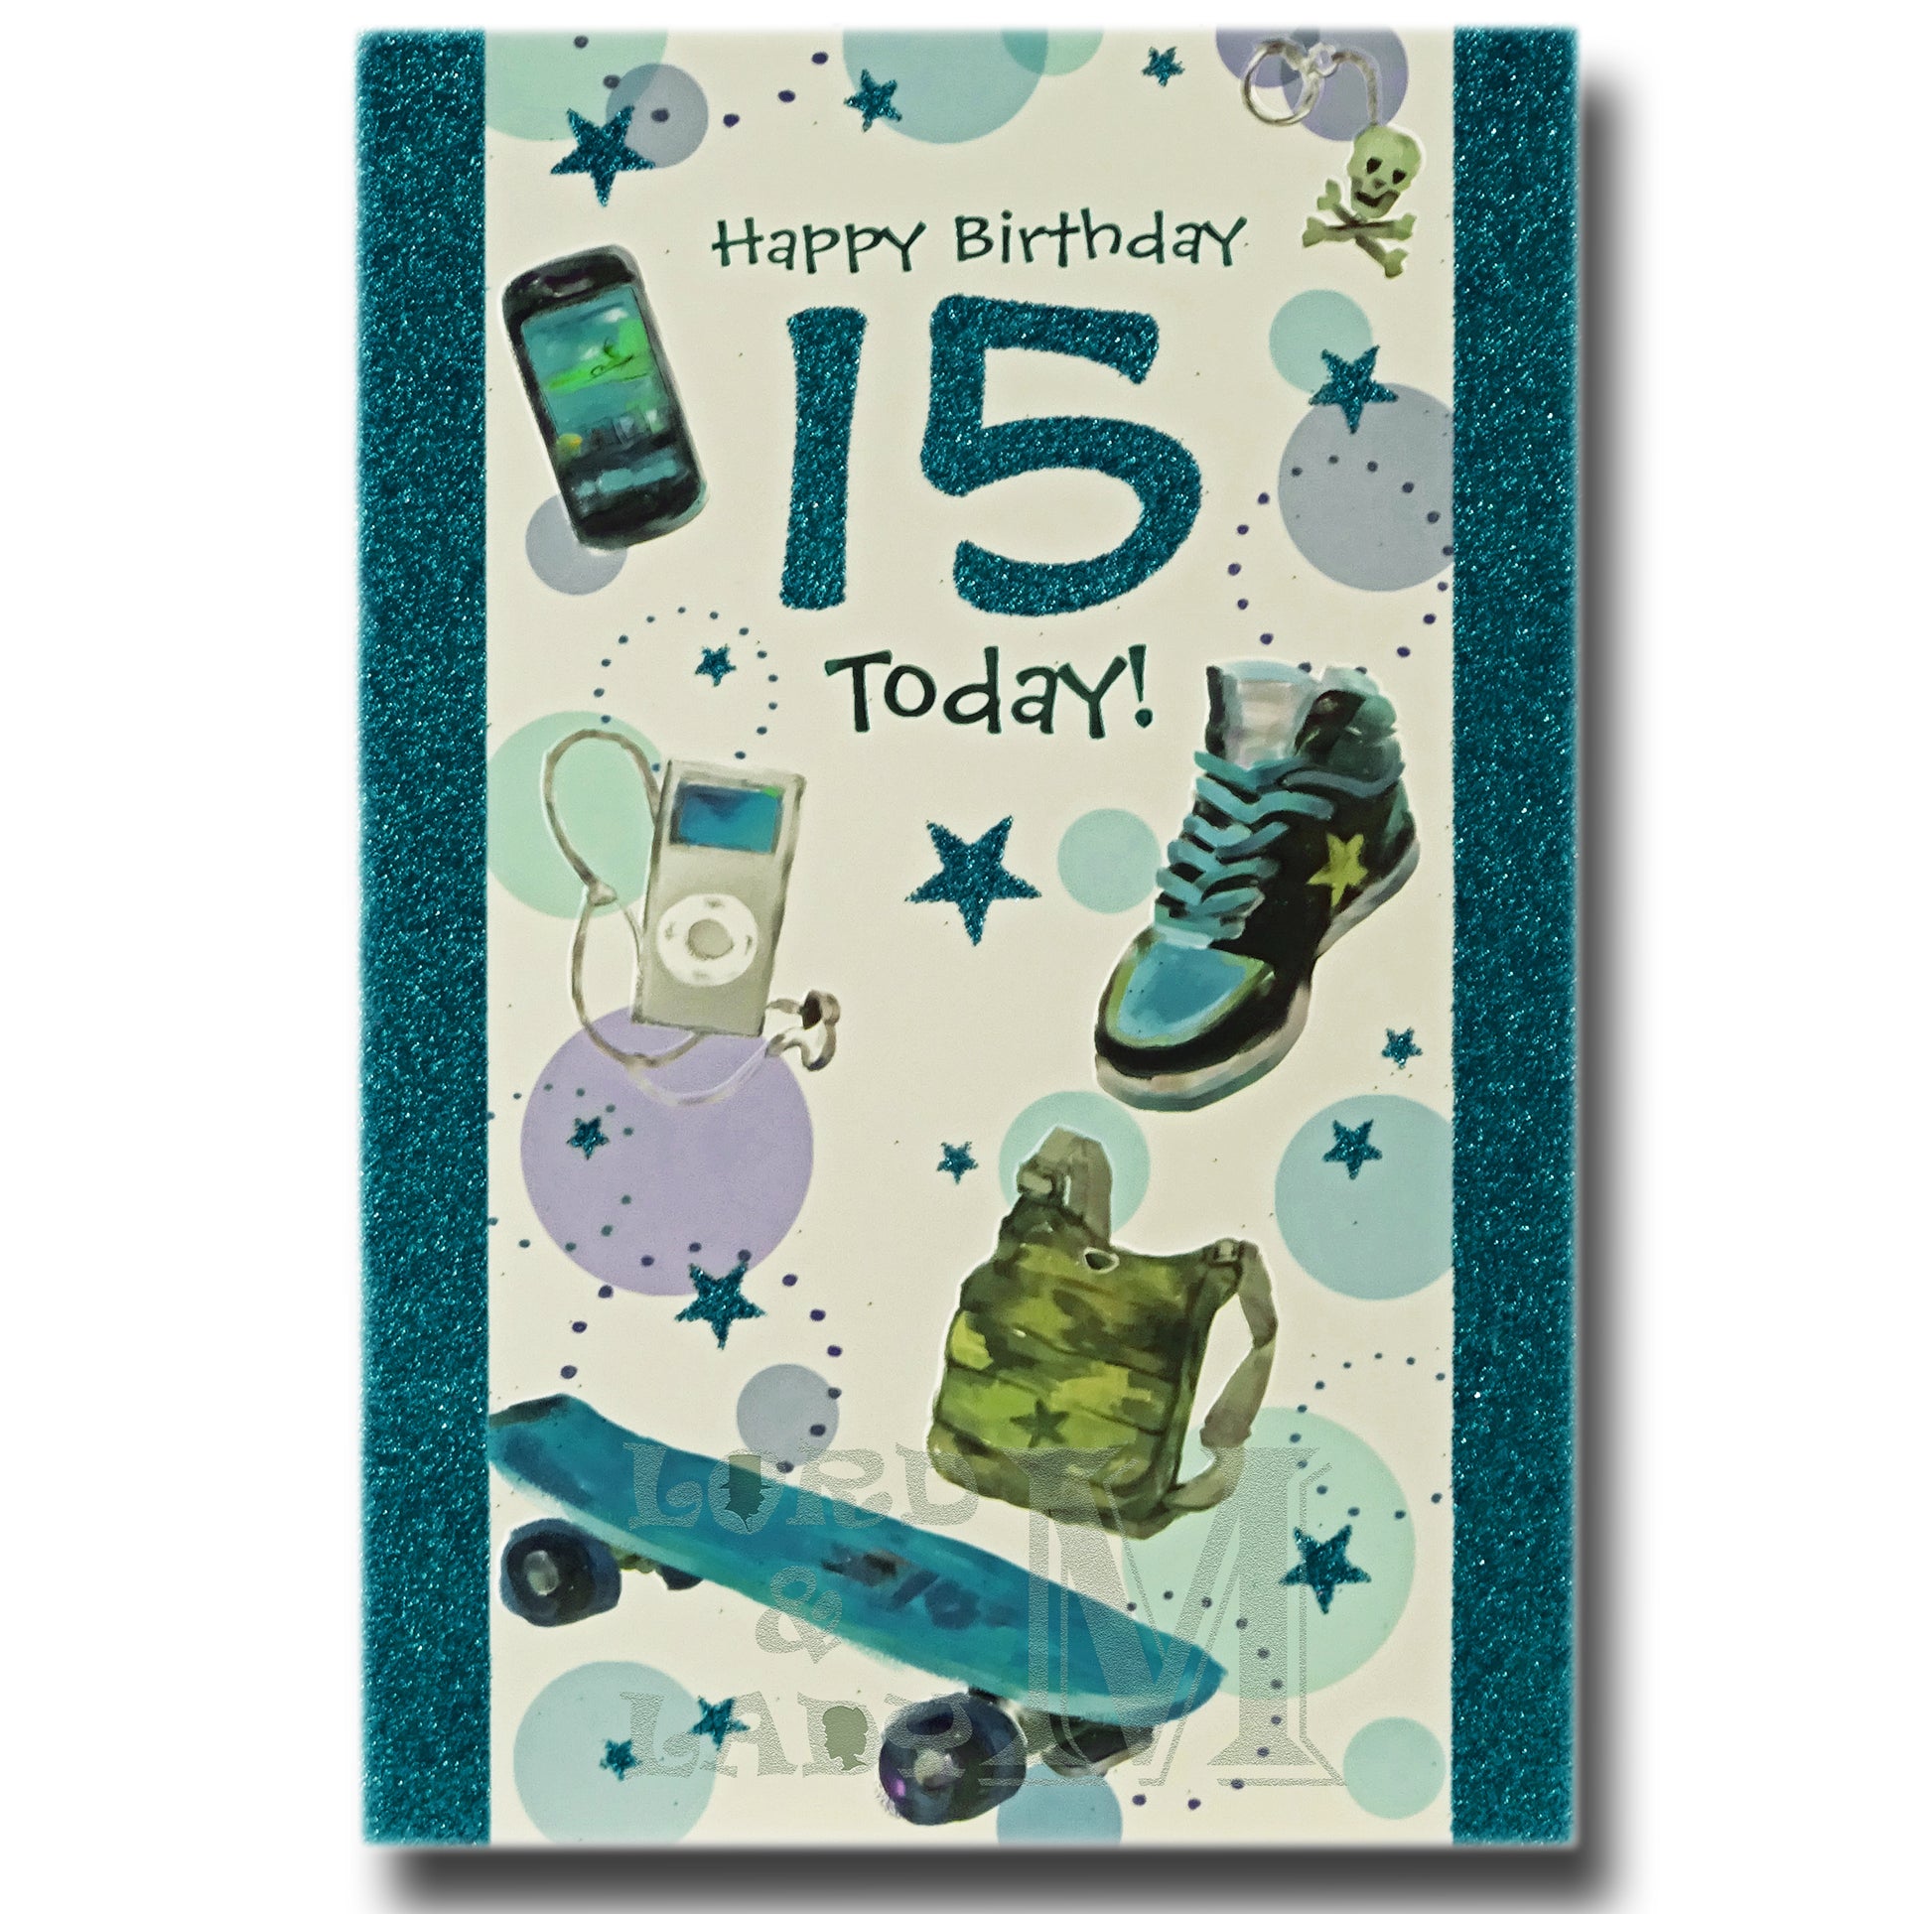 20cm - Happy Birthday 15 Today! - Skateboard - DGC